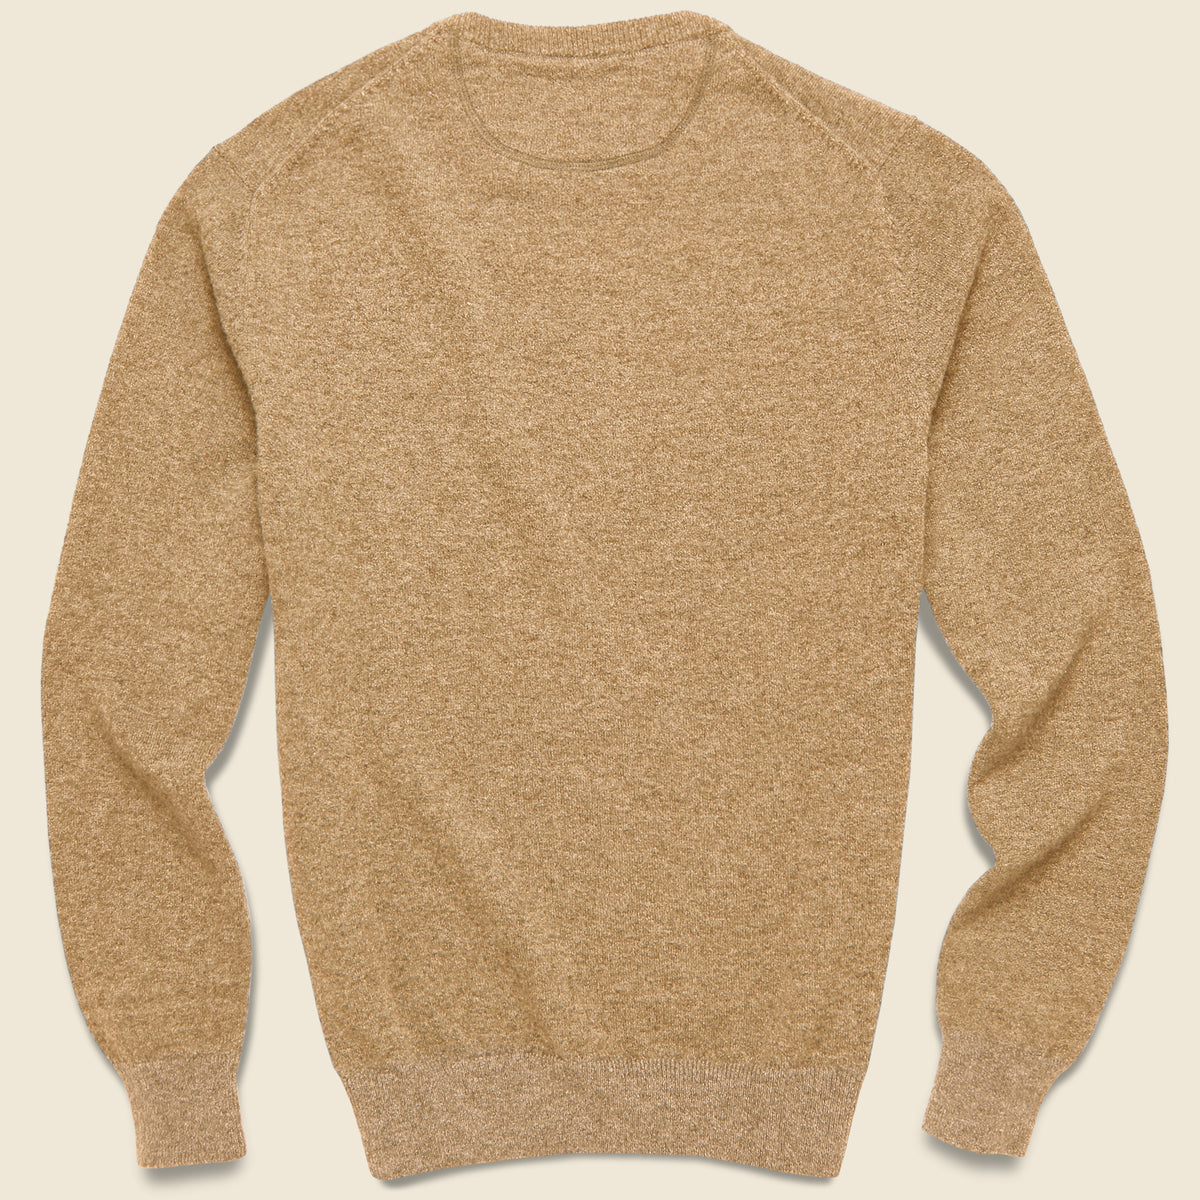 Jackson Crew Sweater - Wheat Heather